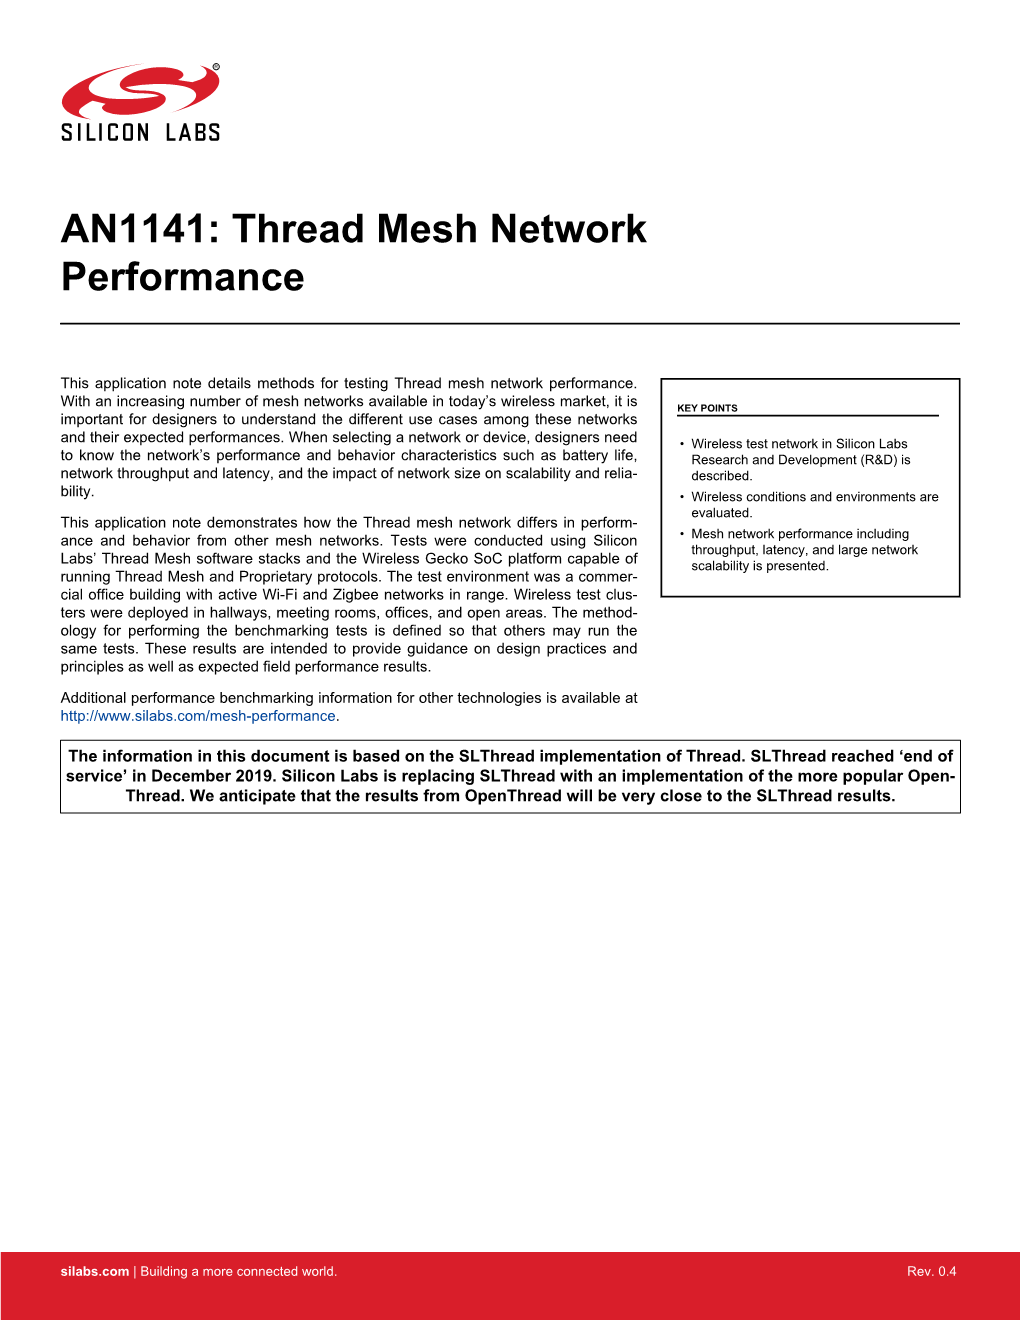 AN1141: Thread Mesh Network Performance